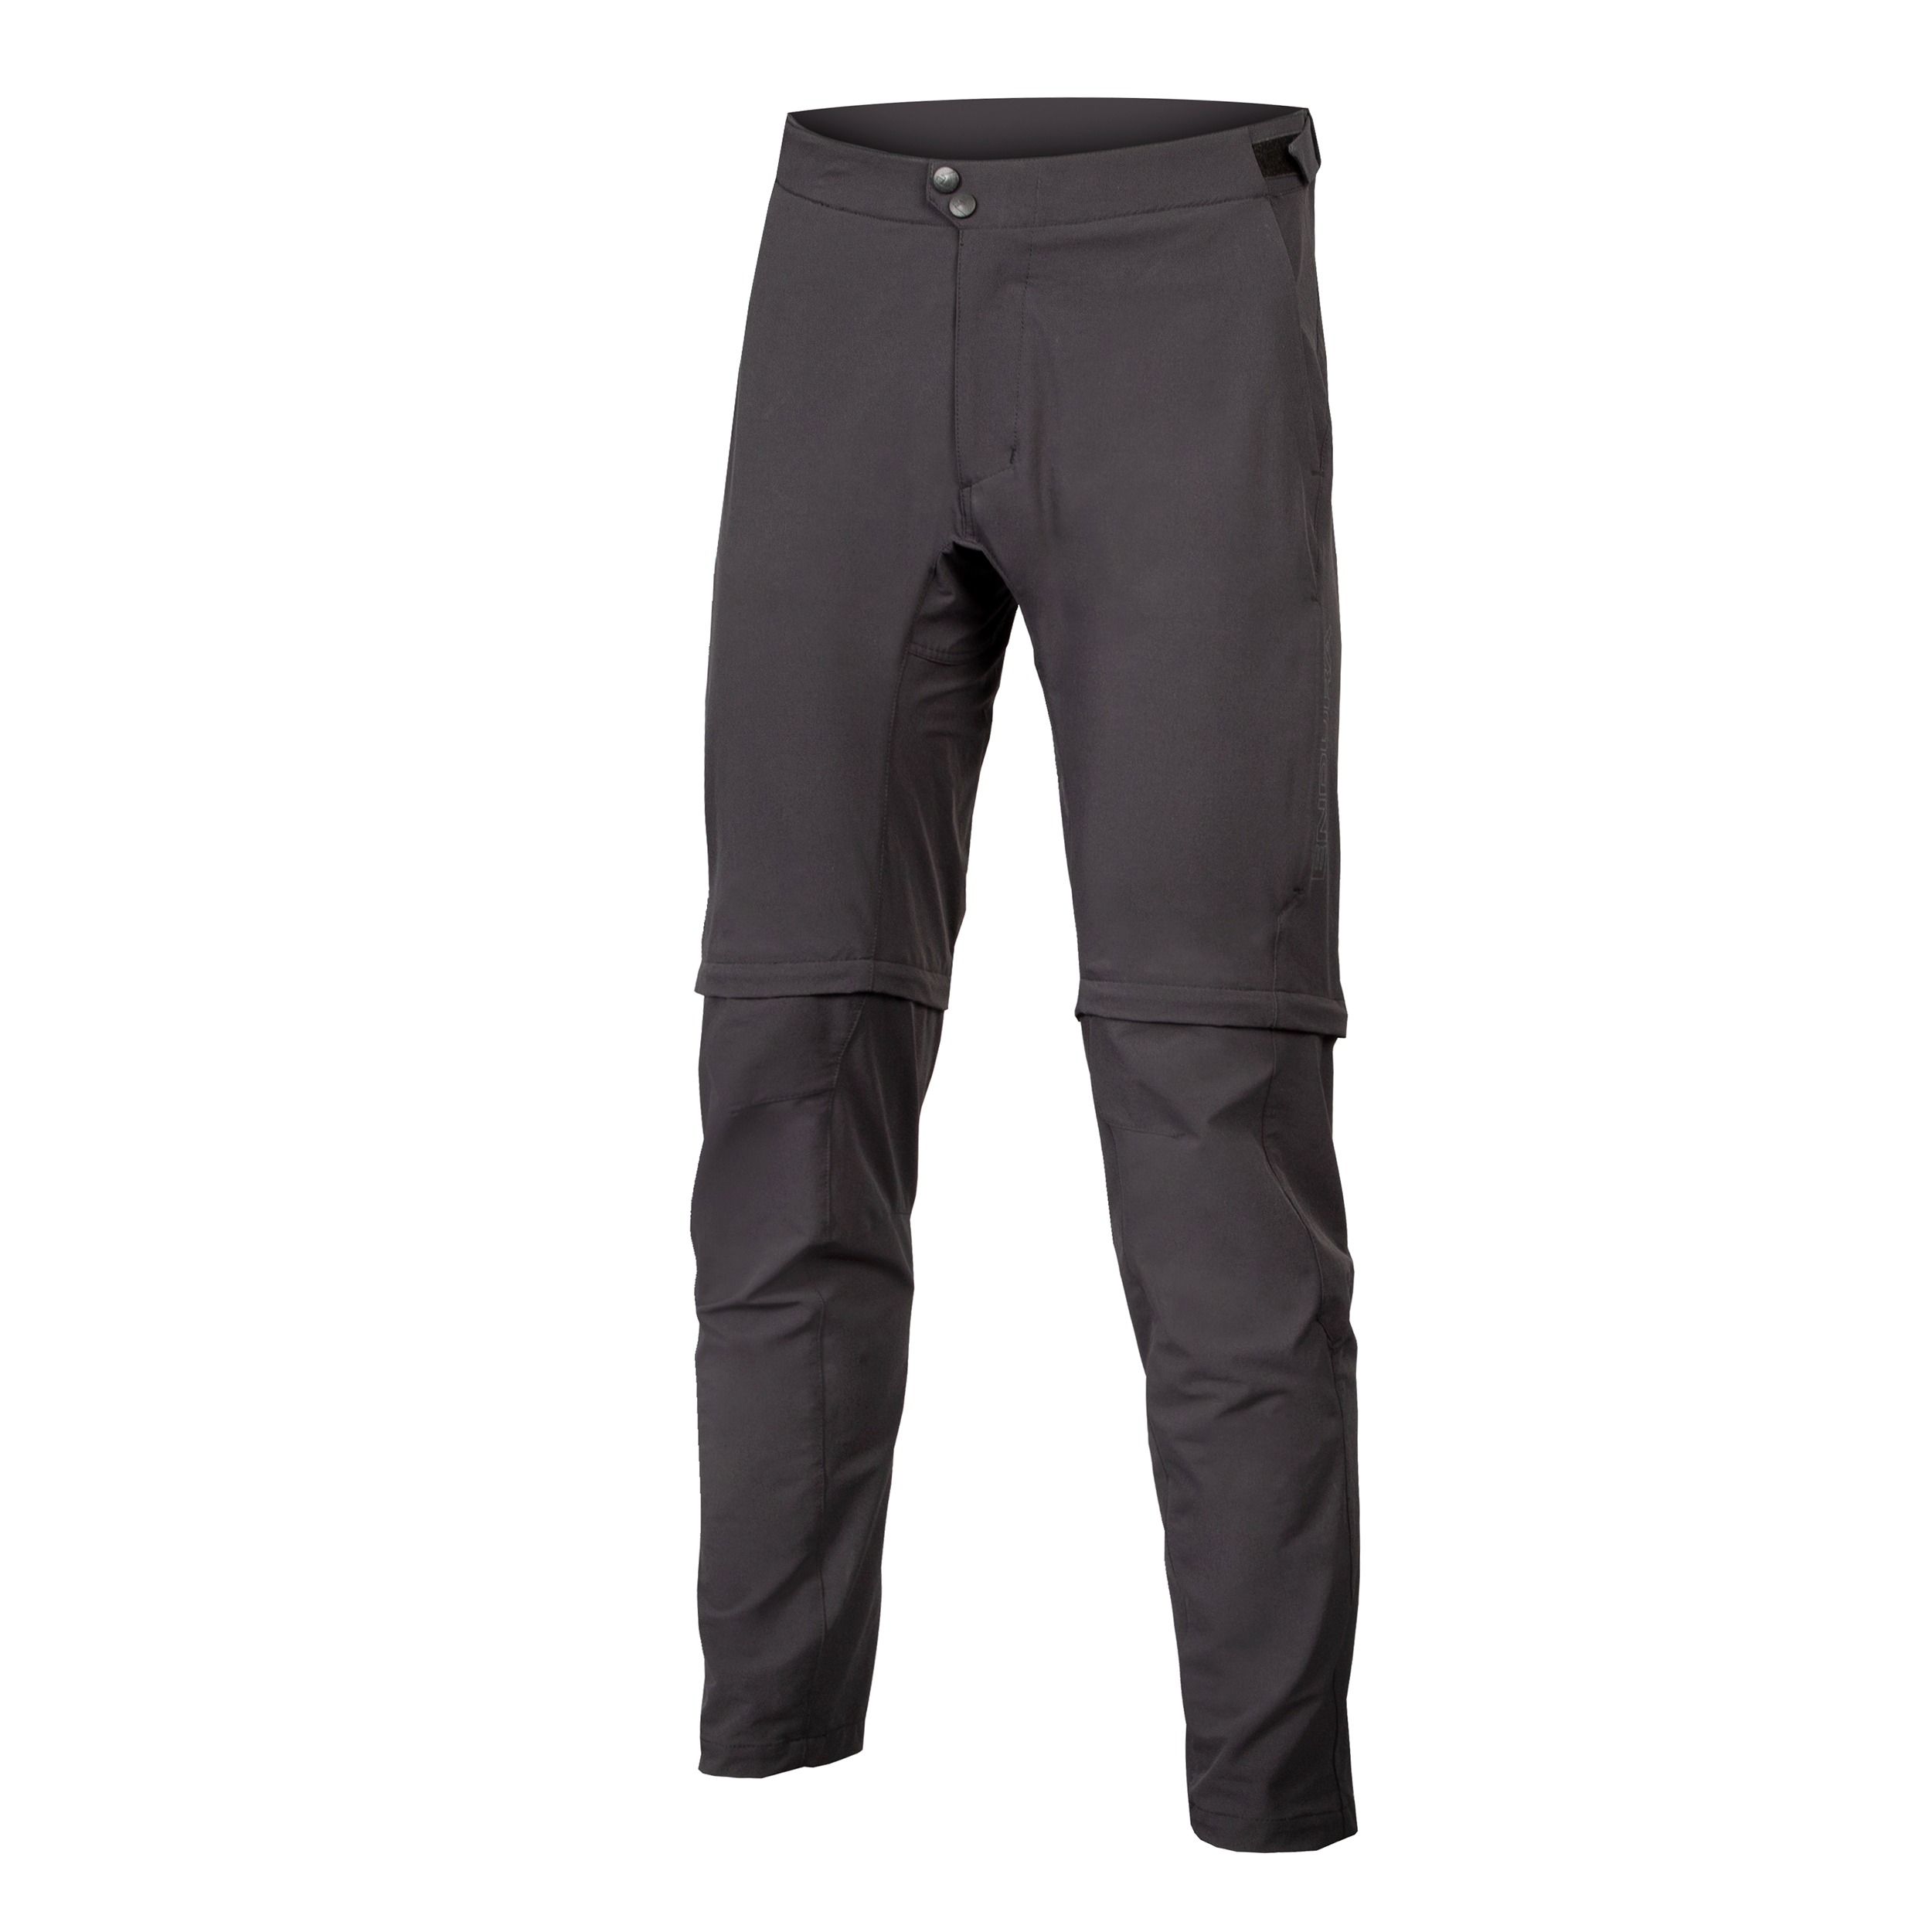 Endura Gv500 ZIP-OFF Trousers - £99.99 | Trousers | Cyclestore